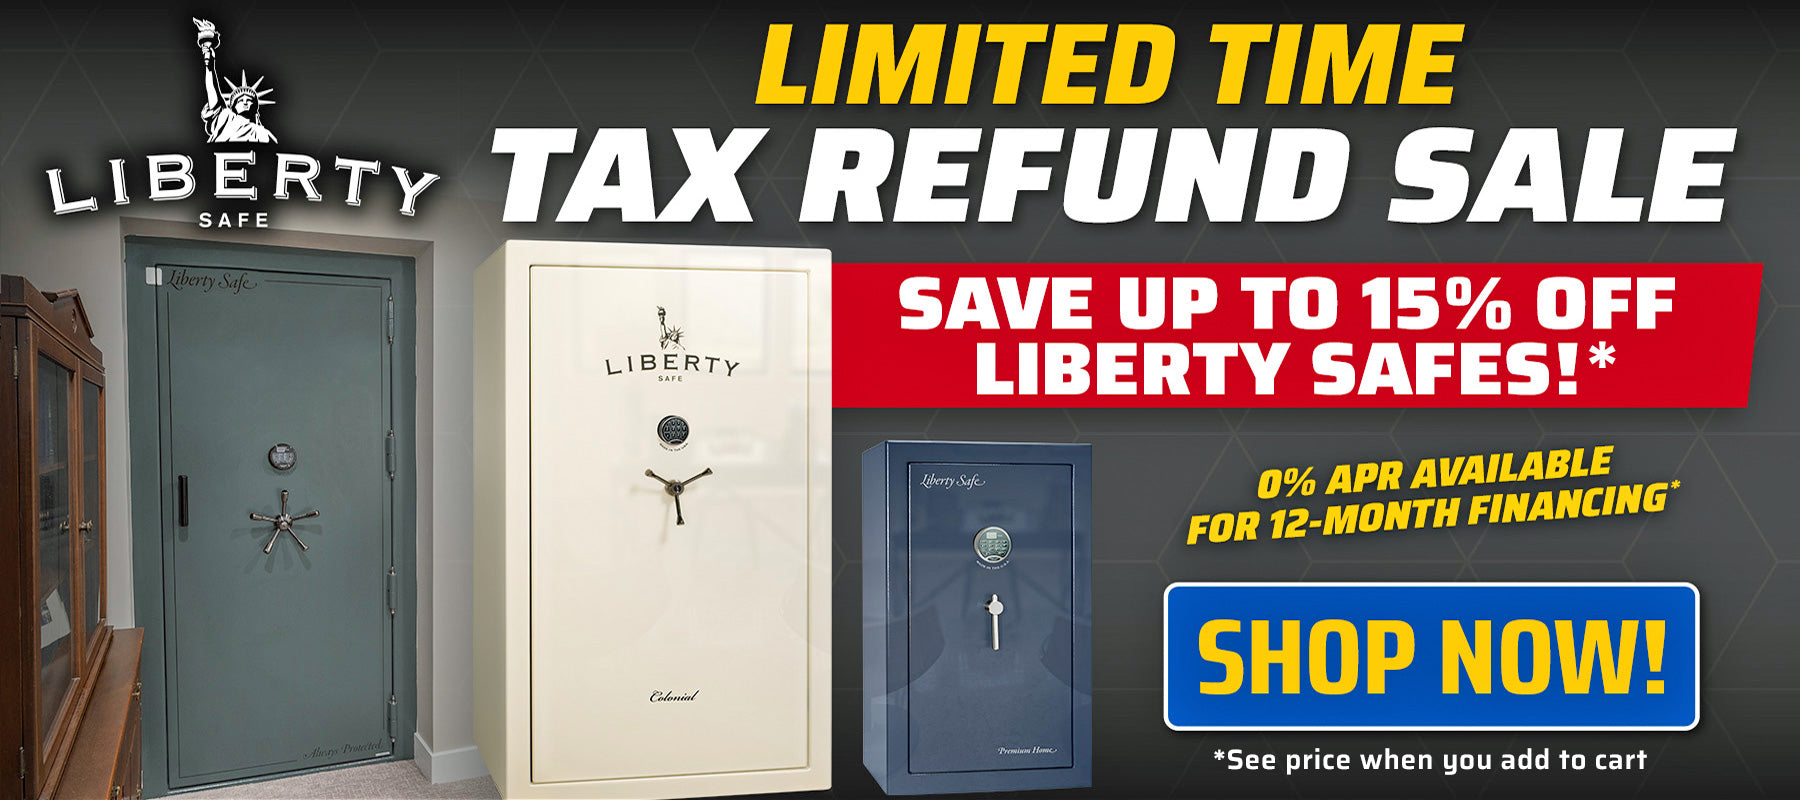 Tax Refund Sale on Liberty Safes